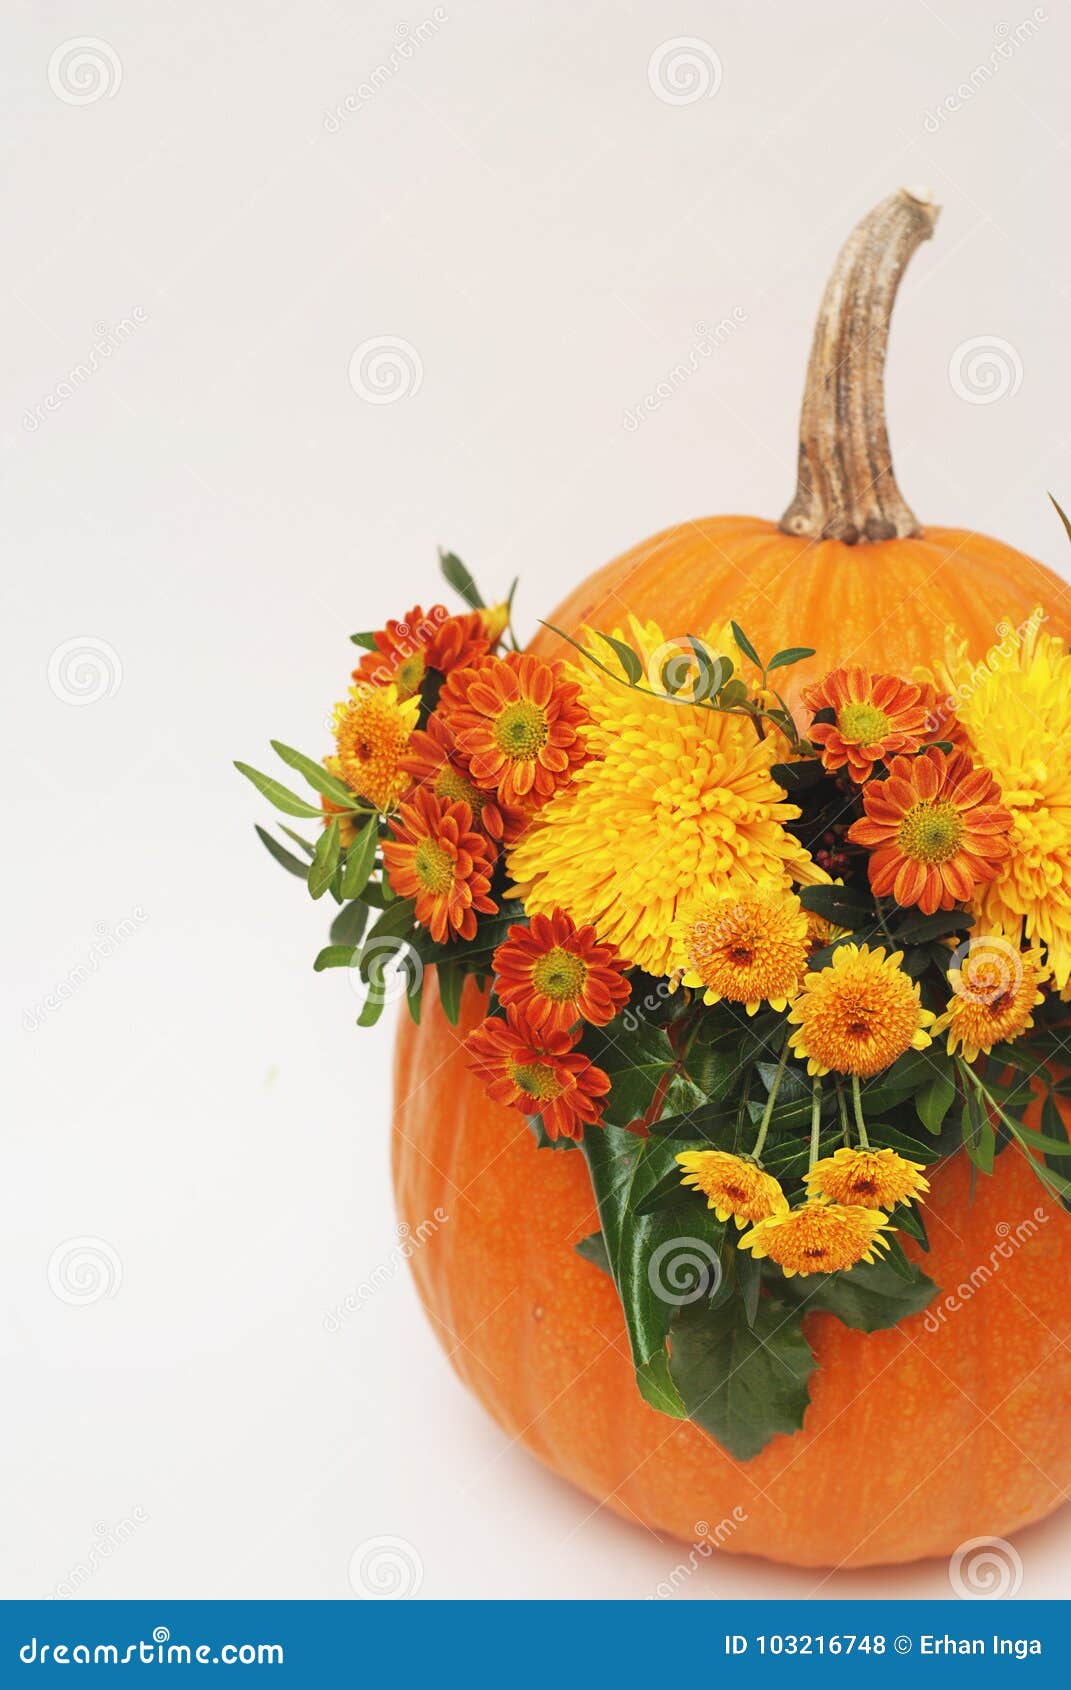 Autumn Floral Bouquet In A Pumpkin Vase For Autumn Or Halloween Floral Arrangement In Pumpkin Vertical Image Stock Photo Image Of Orange Nature 103216748